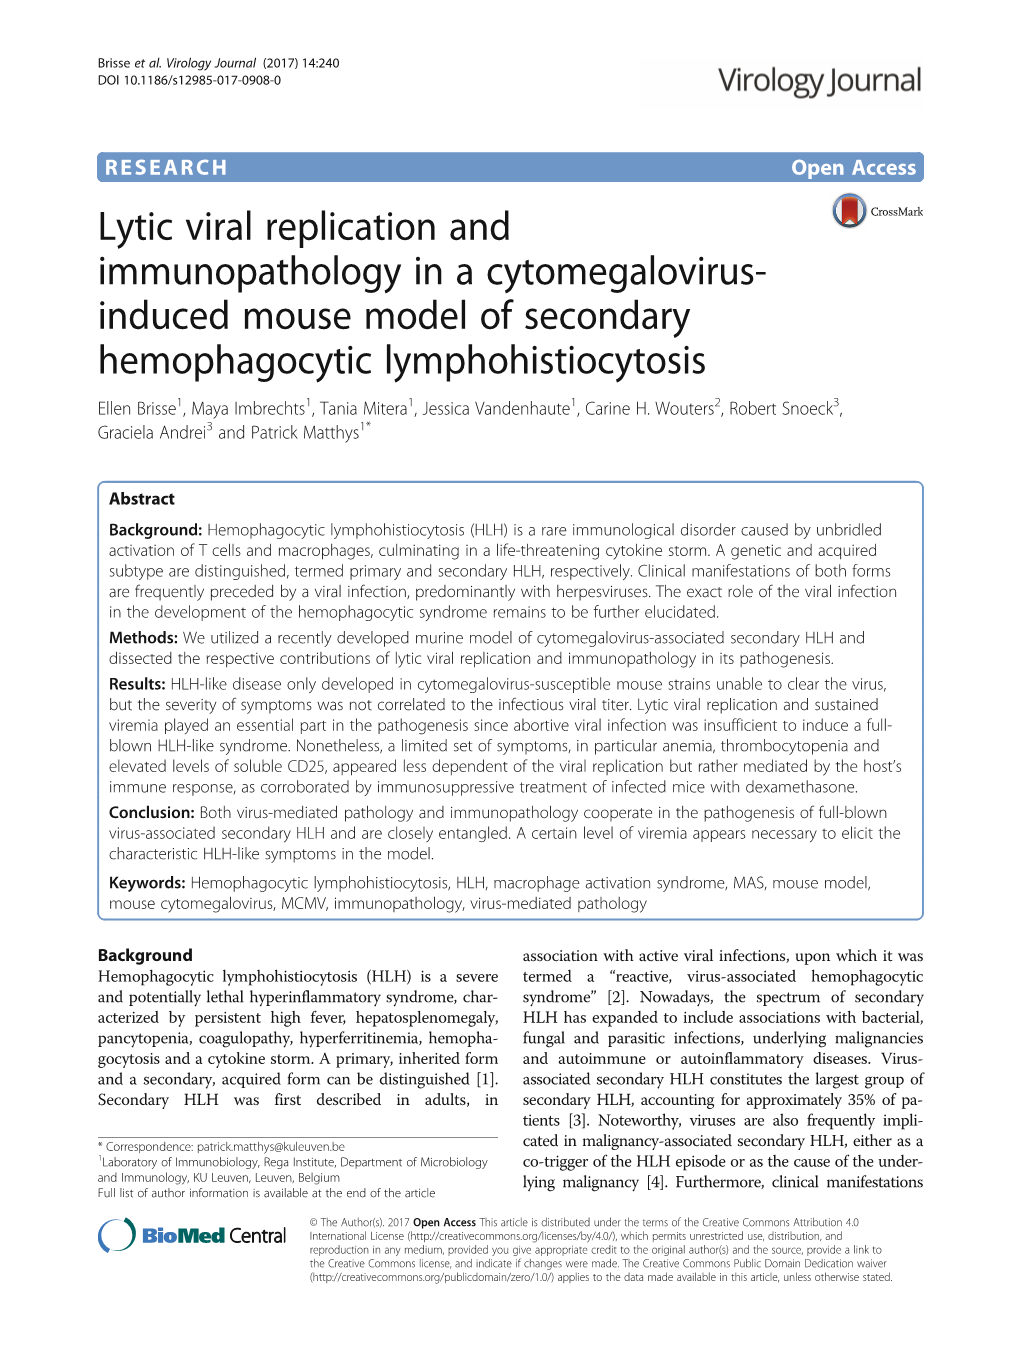 Induced Mouse Model of Secondary Hemophagocytic Lymphohistiocytosis Ellen Brisse1, Maya Imbrechts1, Tania Mitera1, Jessica Vandenhaute1, Carine H